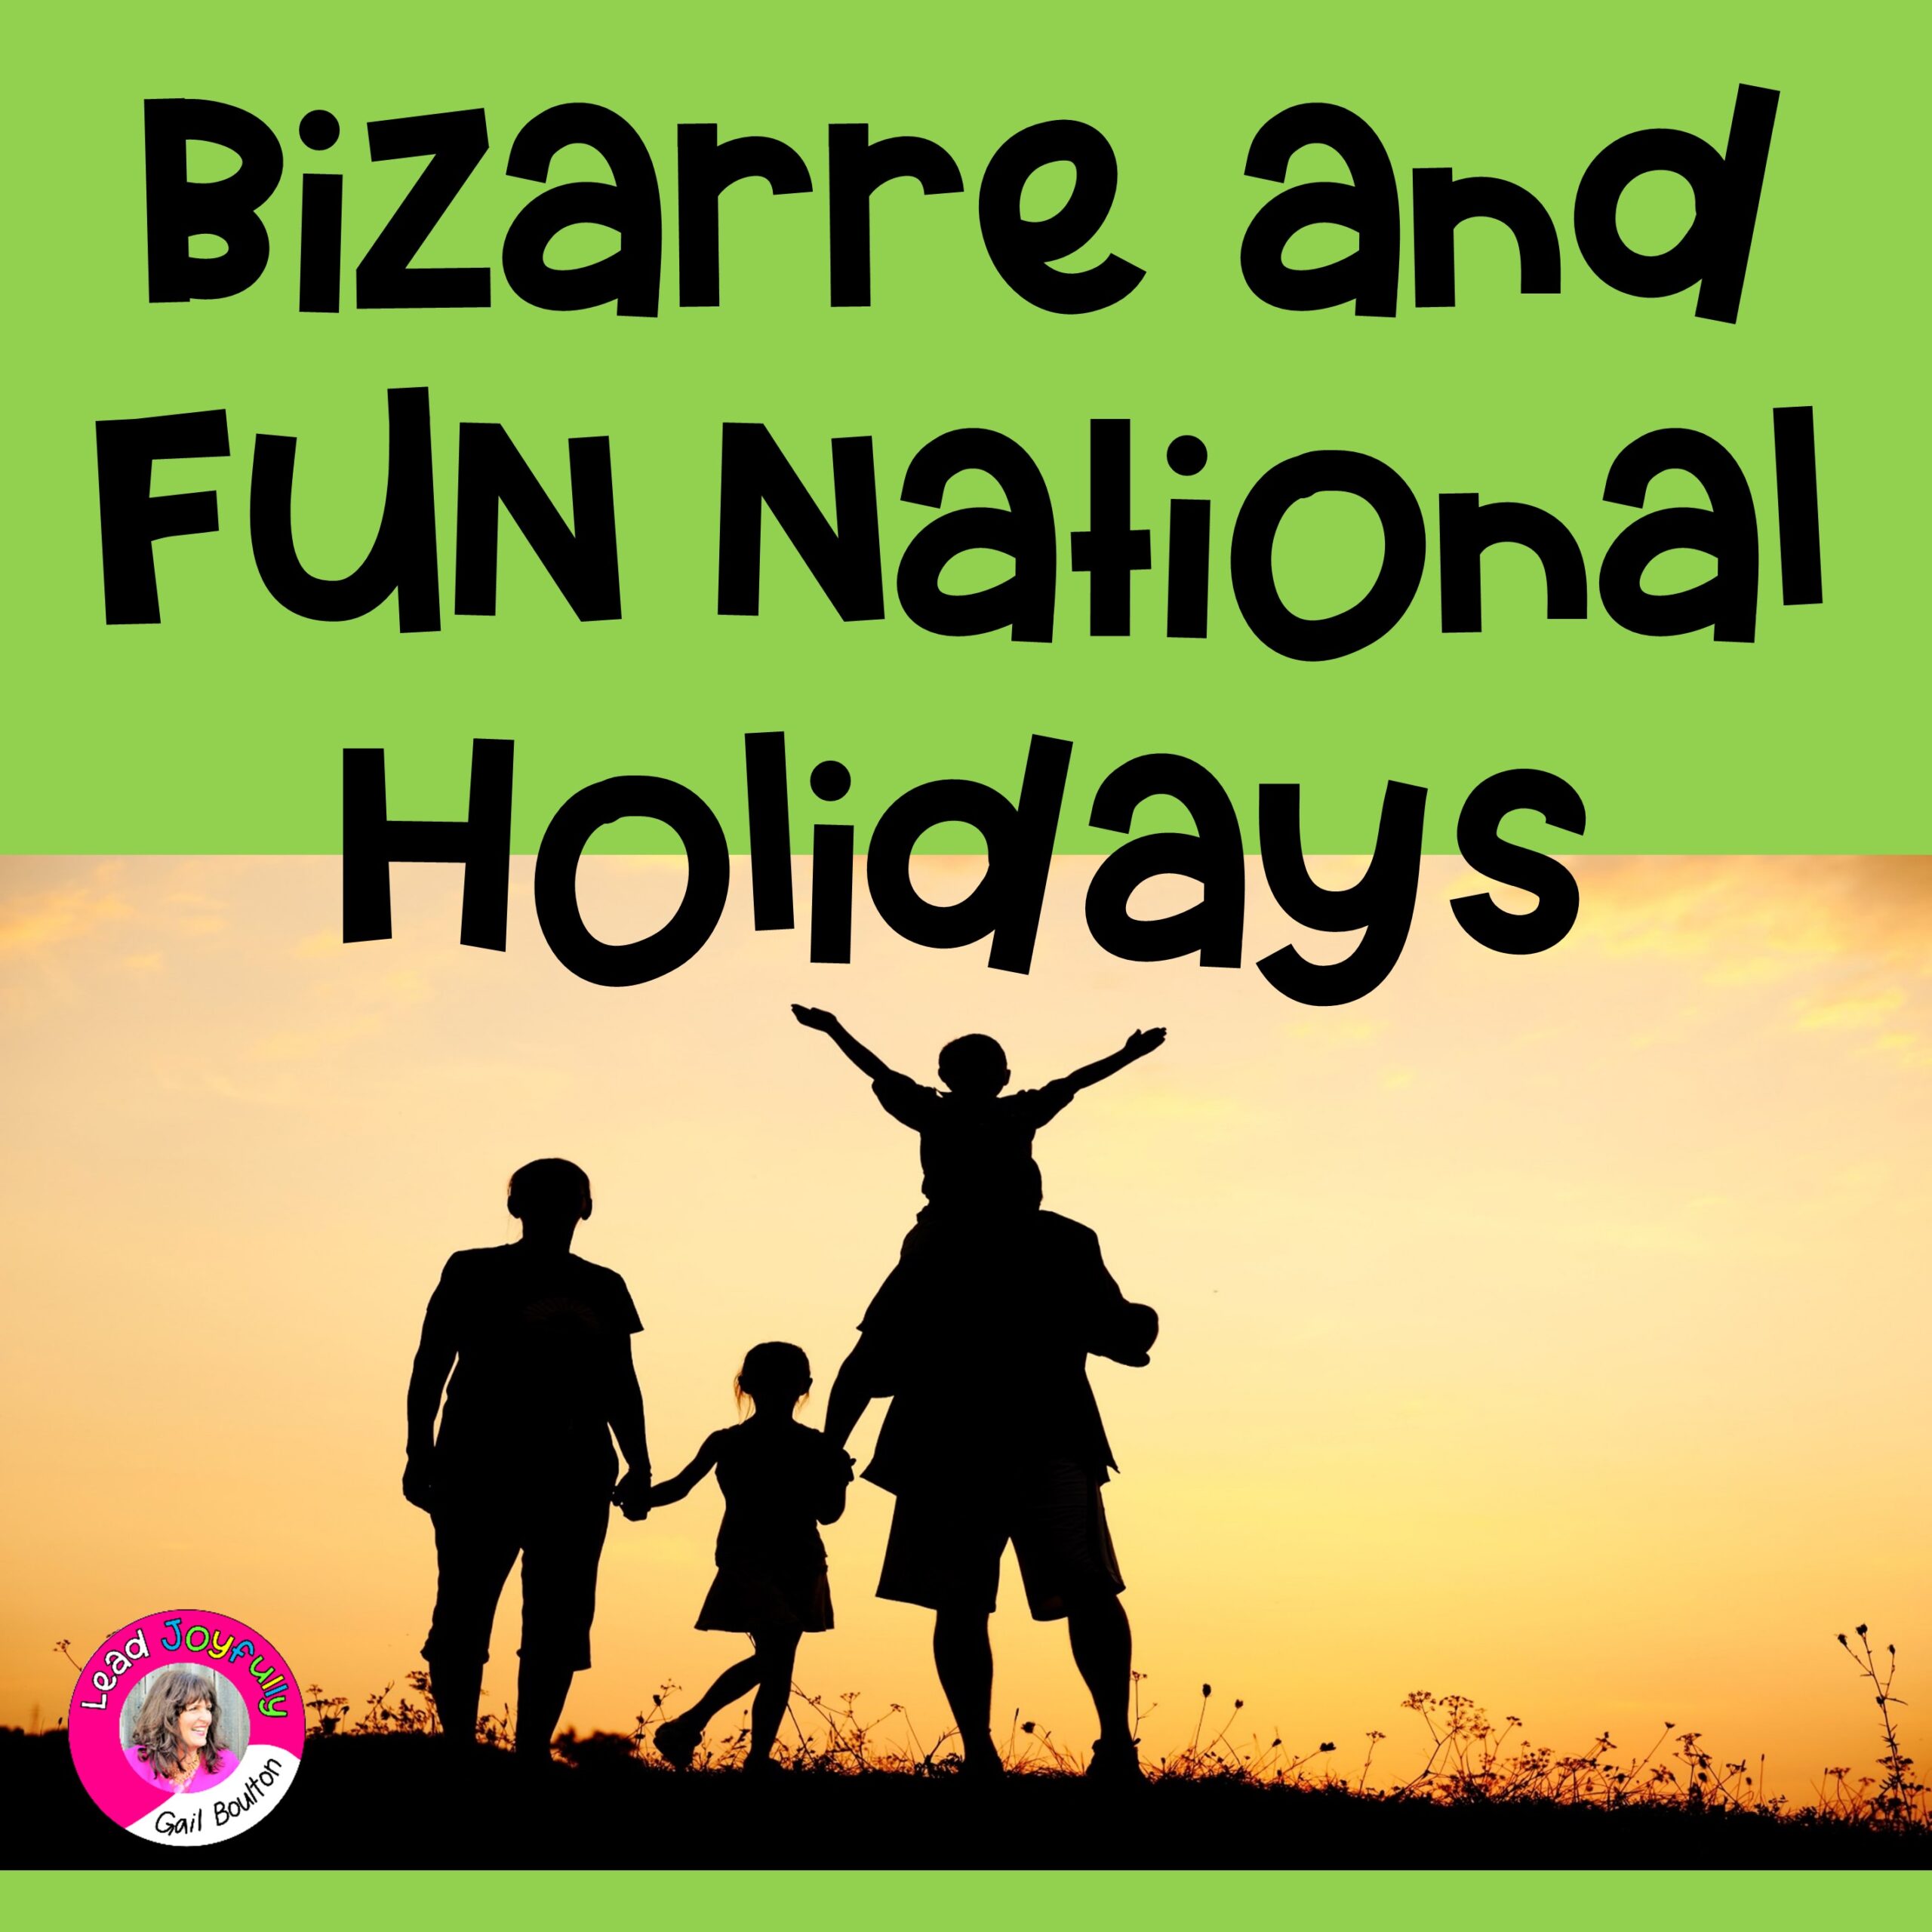 Bizarre and FUN National Holidays